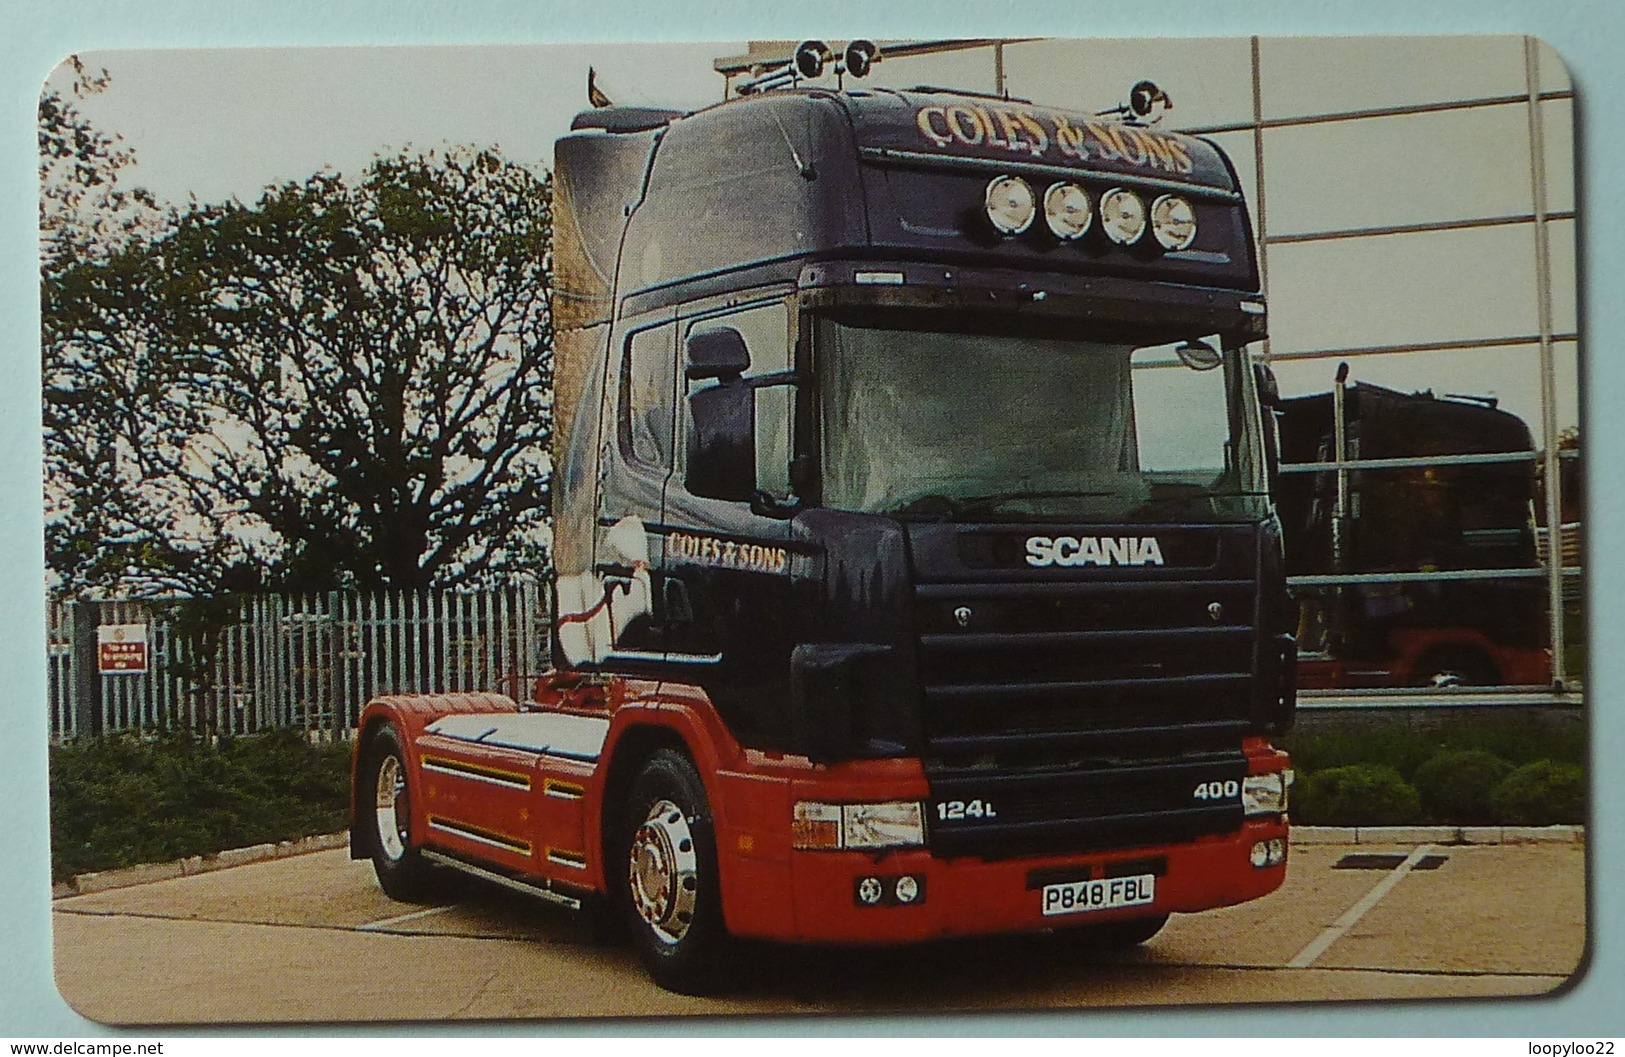 United Kingdom - BT - Chip - PRO261 - Super Trucks No 1 - Coles & Sons - 1000ex - Mint - BT Promozionali